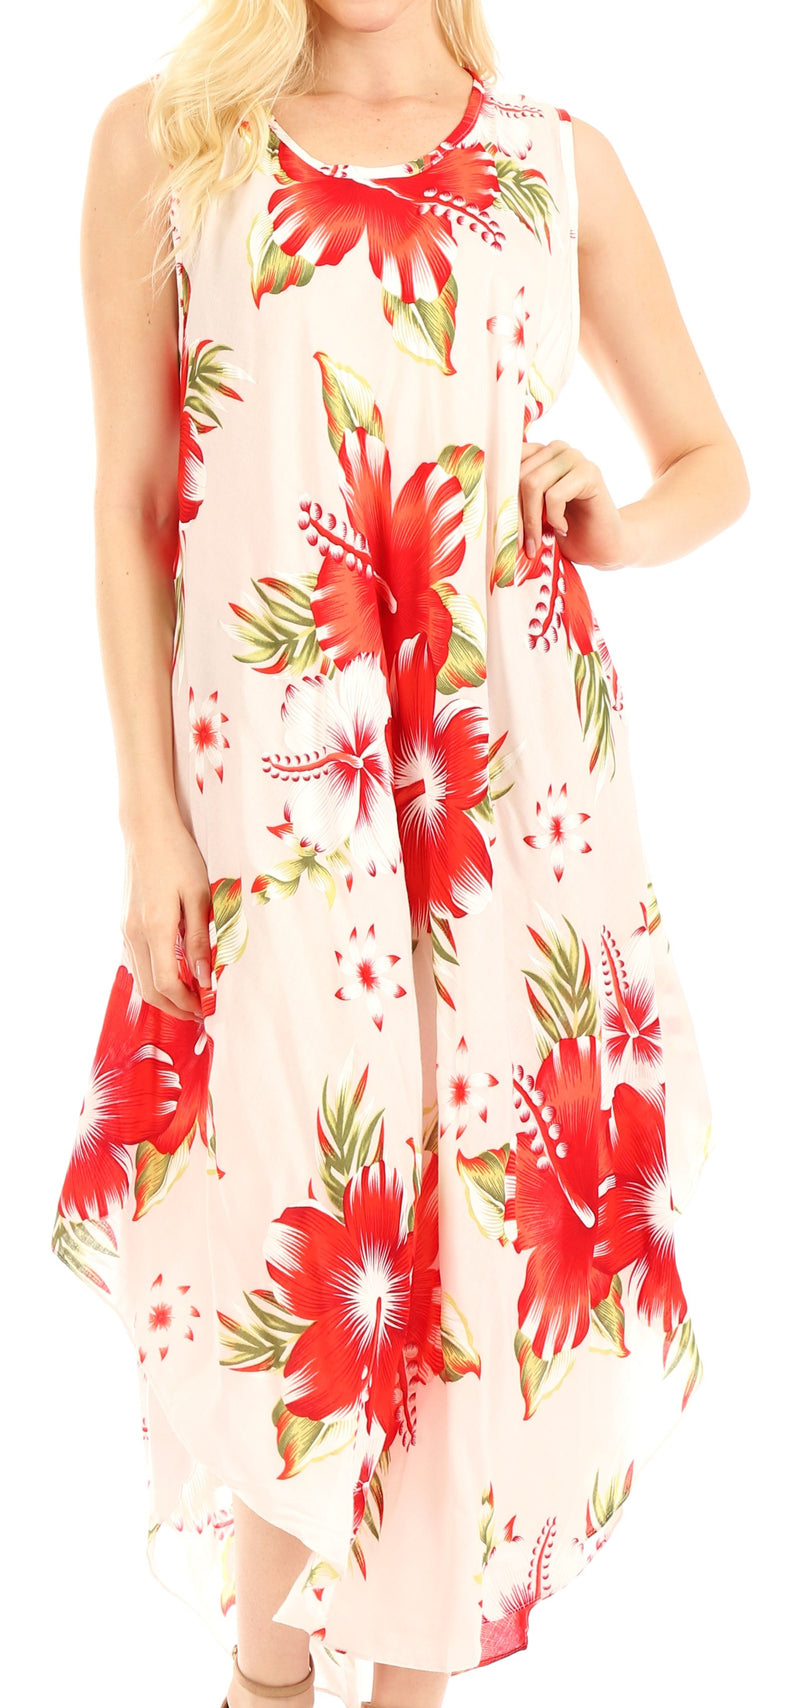 Sakkas Aba Women's Casual Summer Floral Print Sleeveless Loose Dress Cover-up